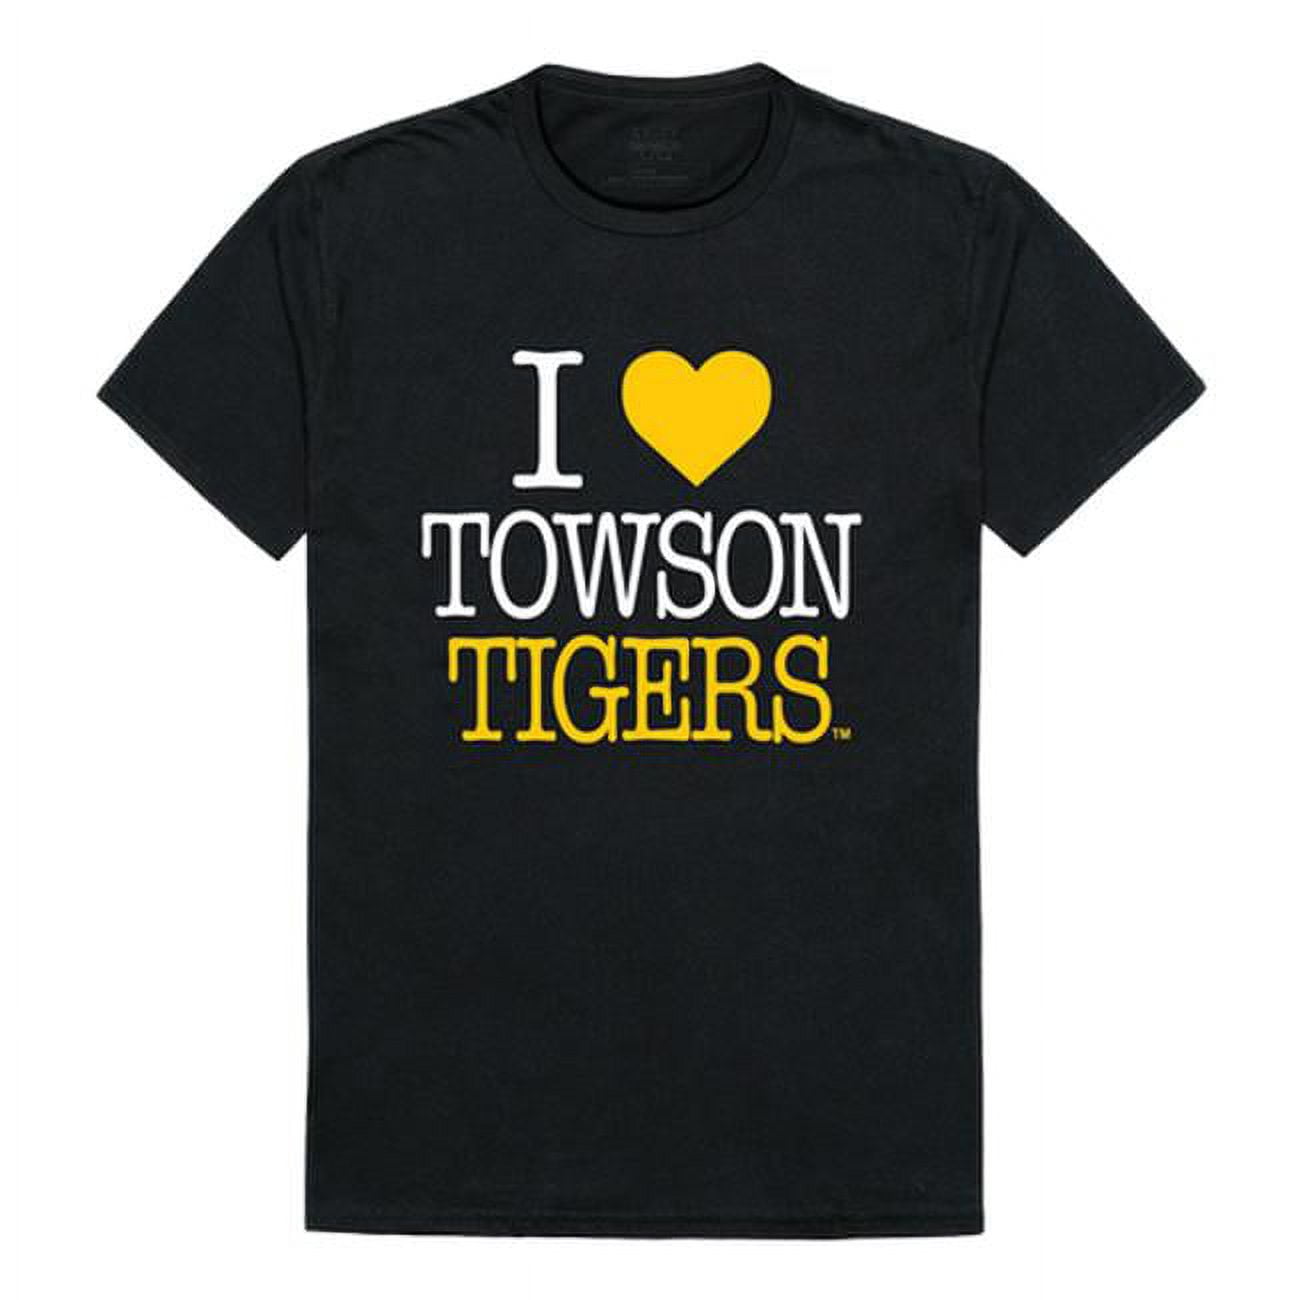 Towson University I Love T-Shirt, Black - Small - Walmart.com